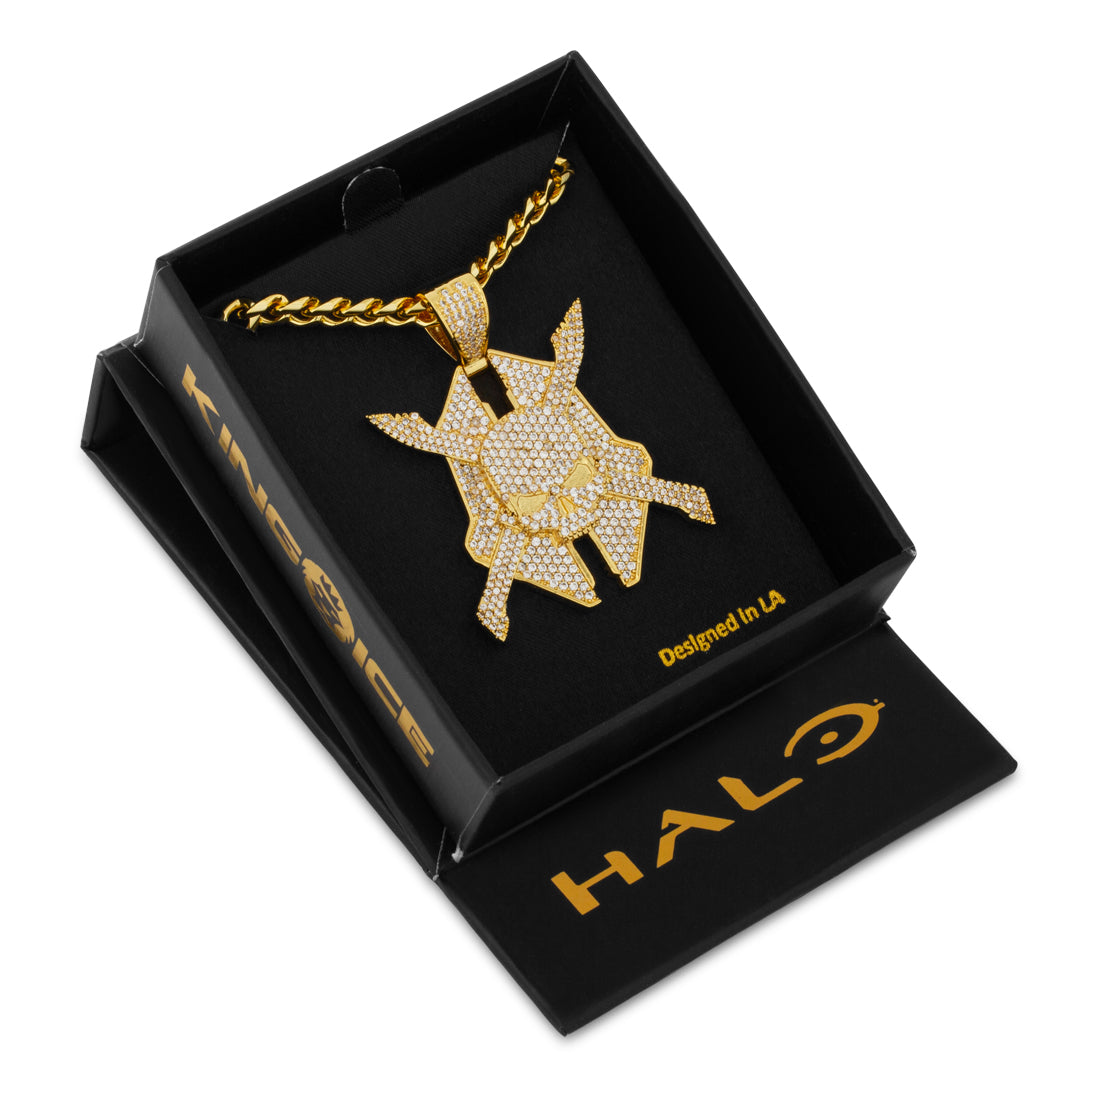 halo legendary emblem